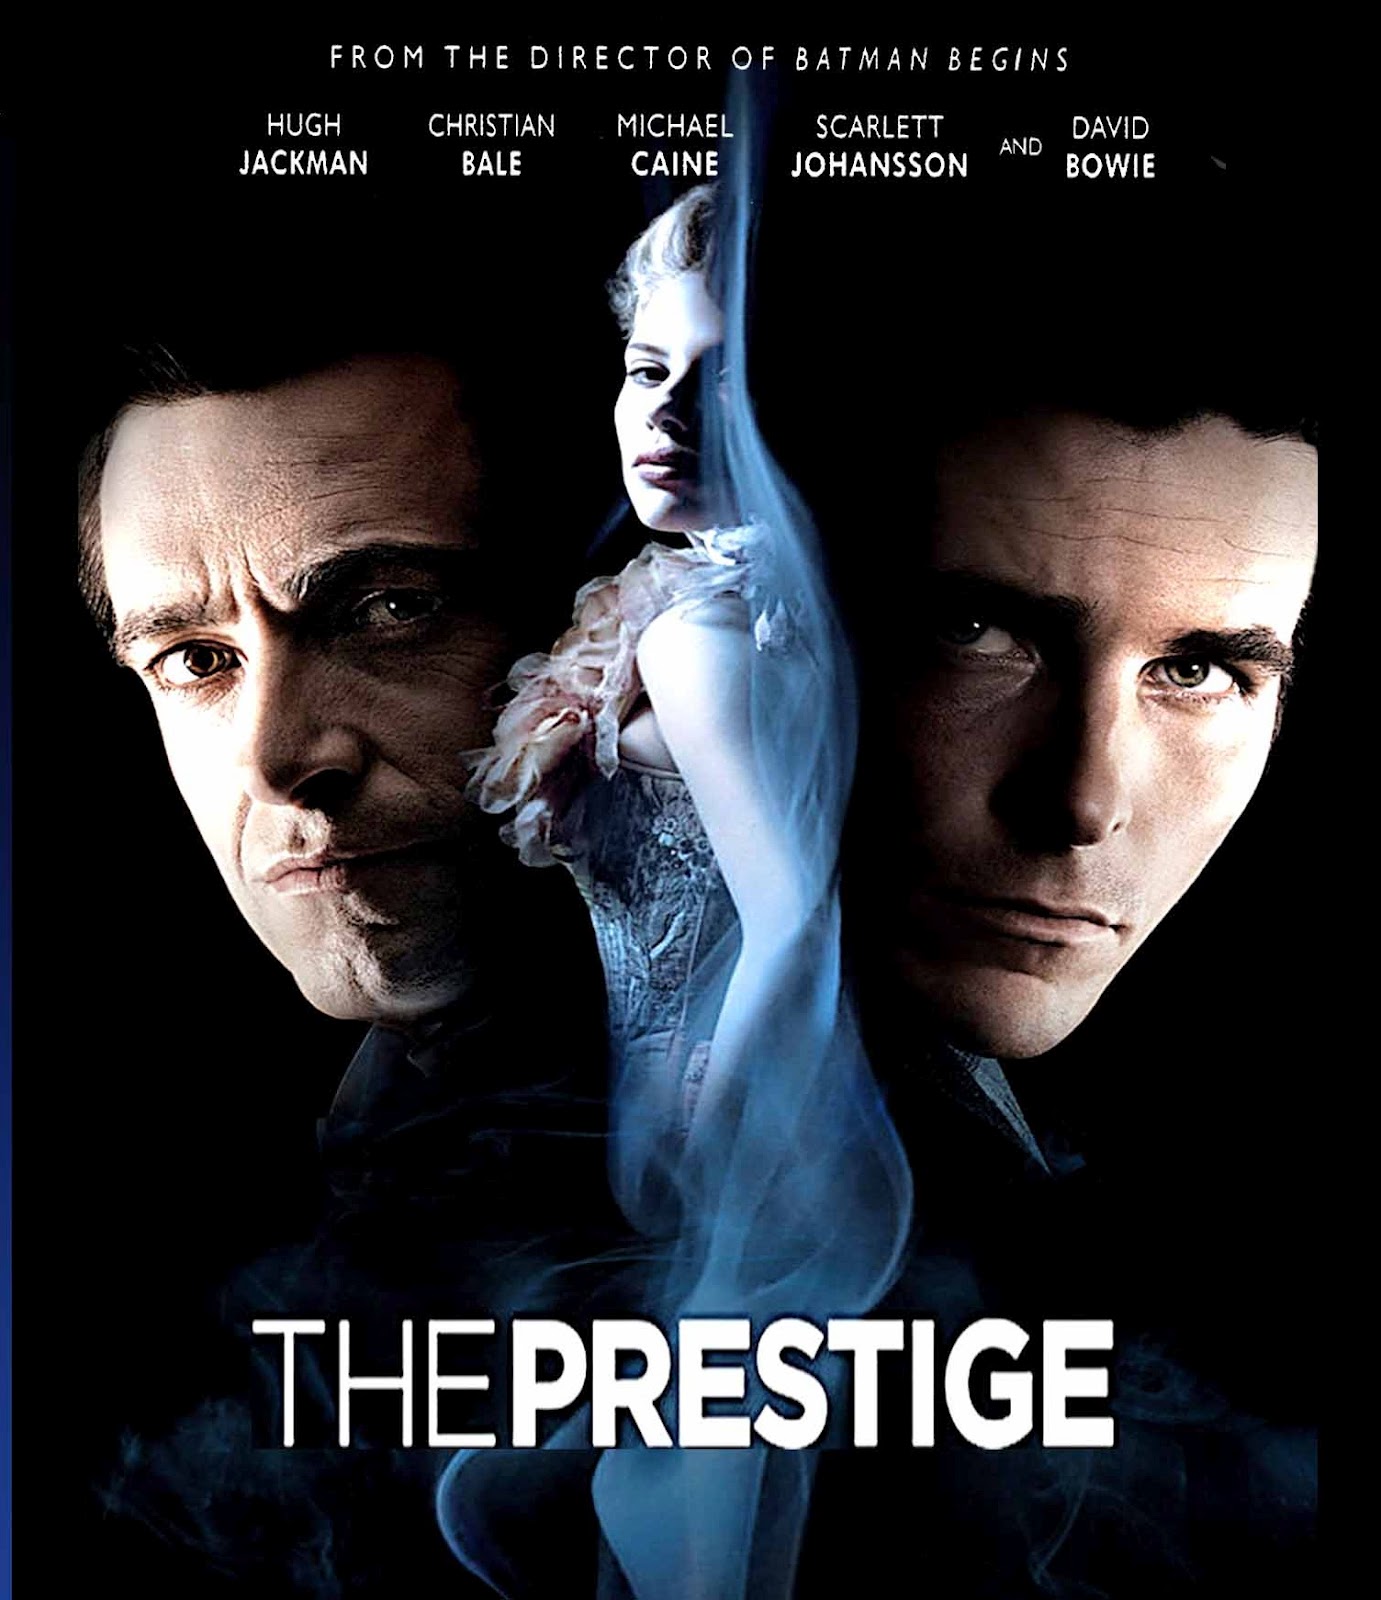 The Prestige, movie poster for ESL lesson